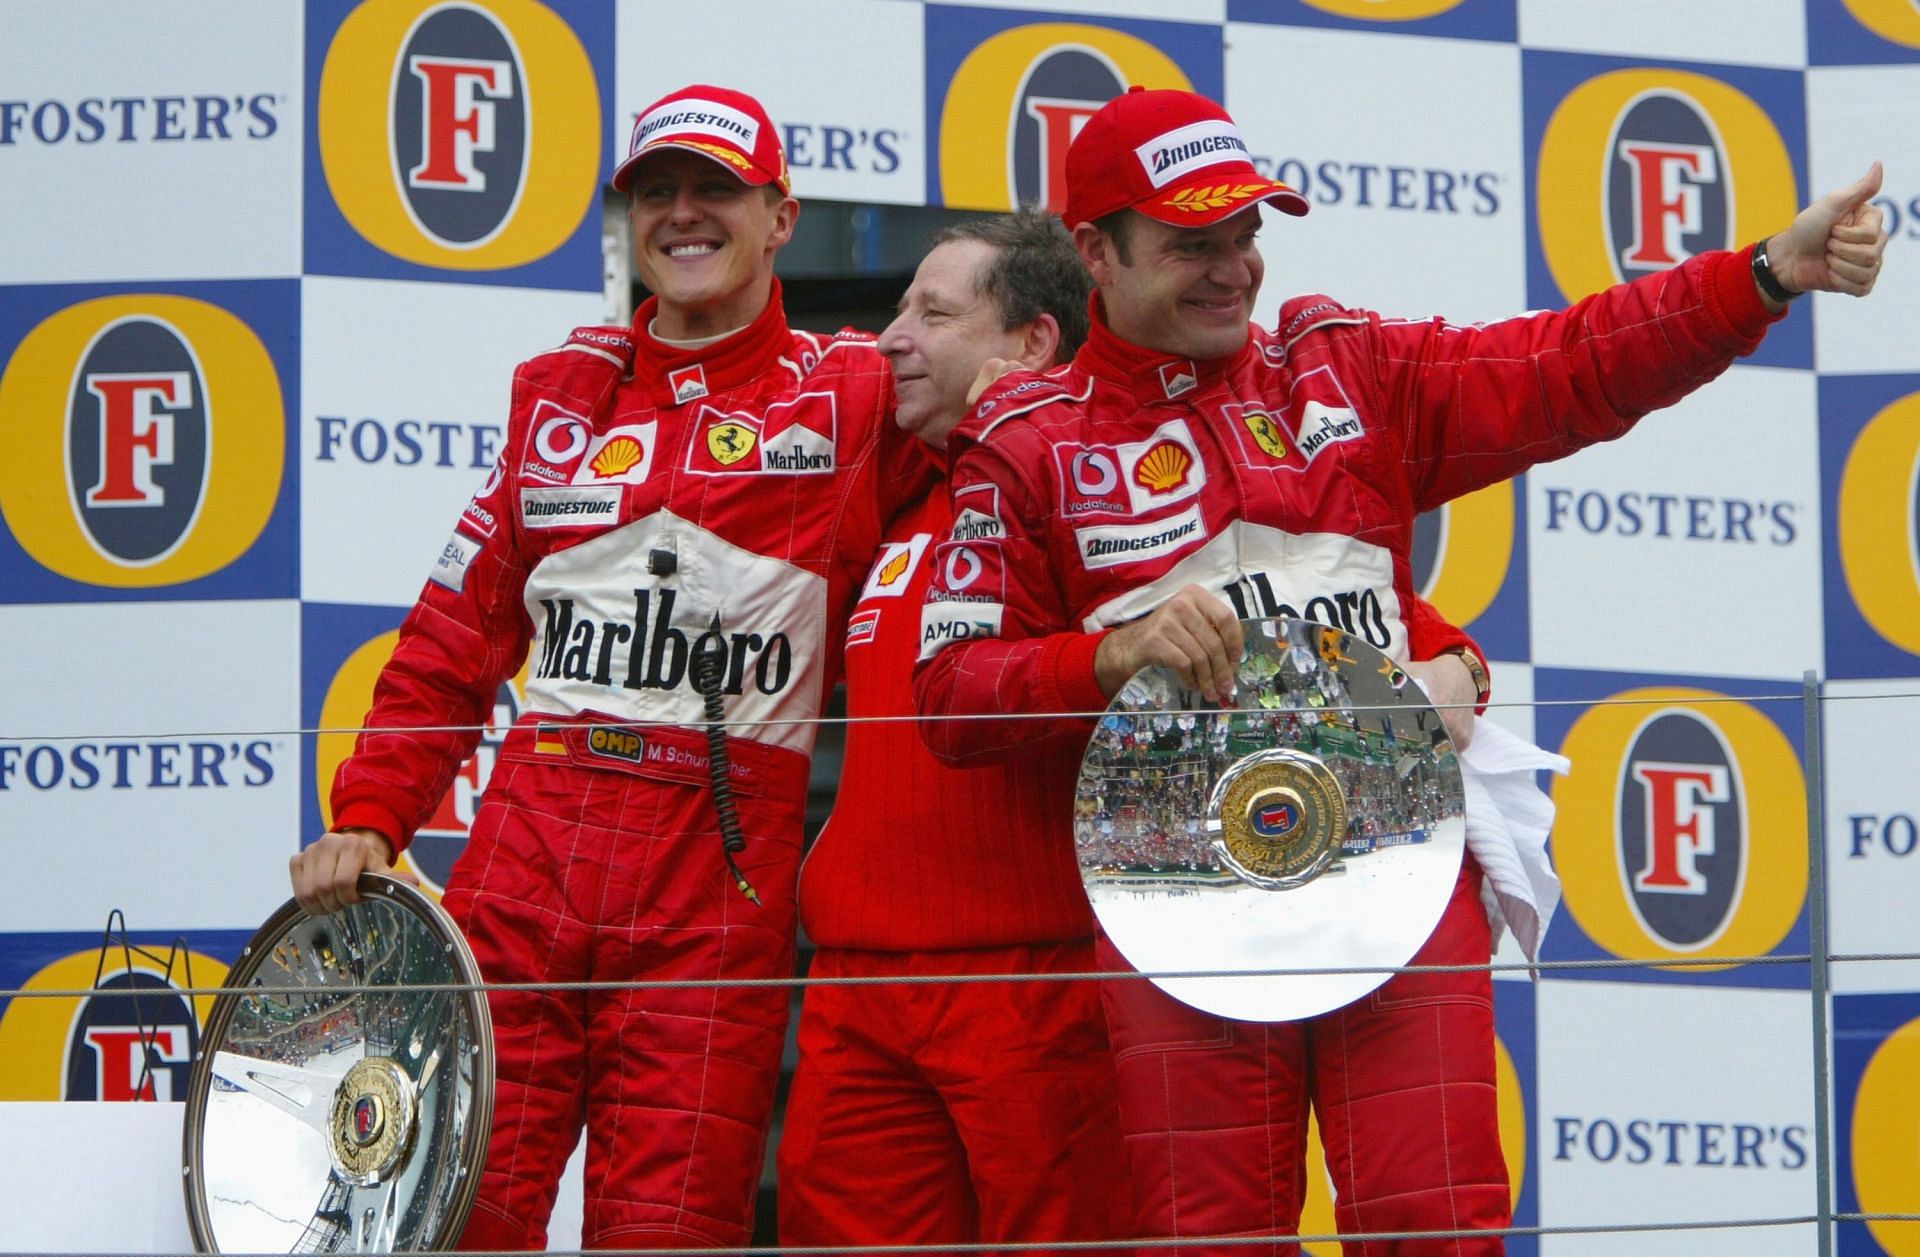 Michael Schumacher (left) has won the most Australian GPs